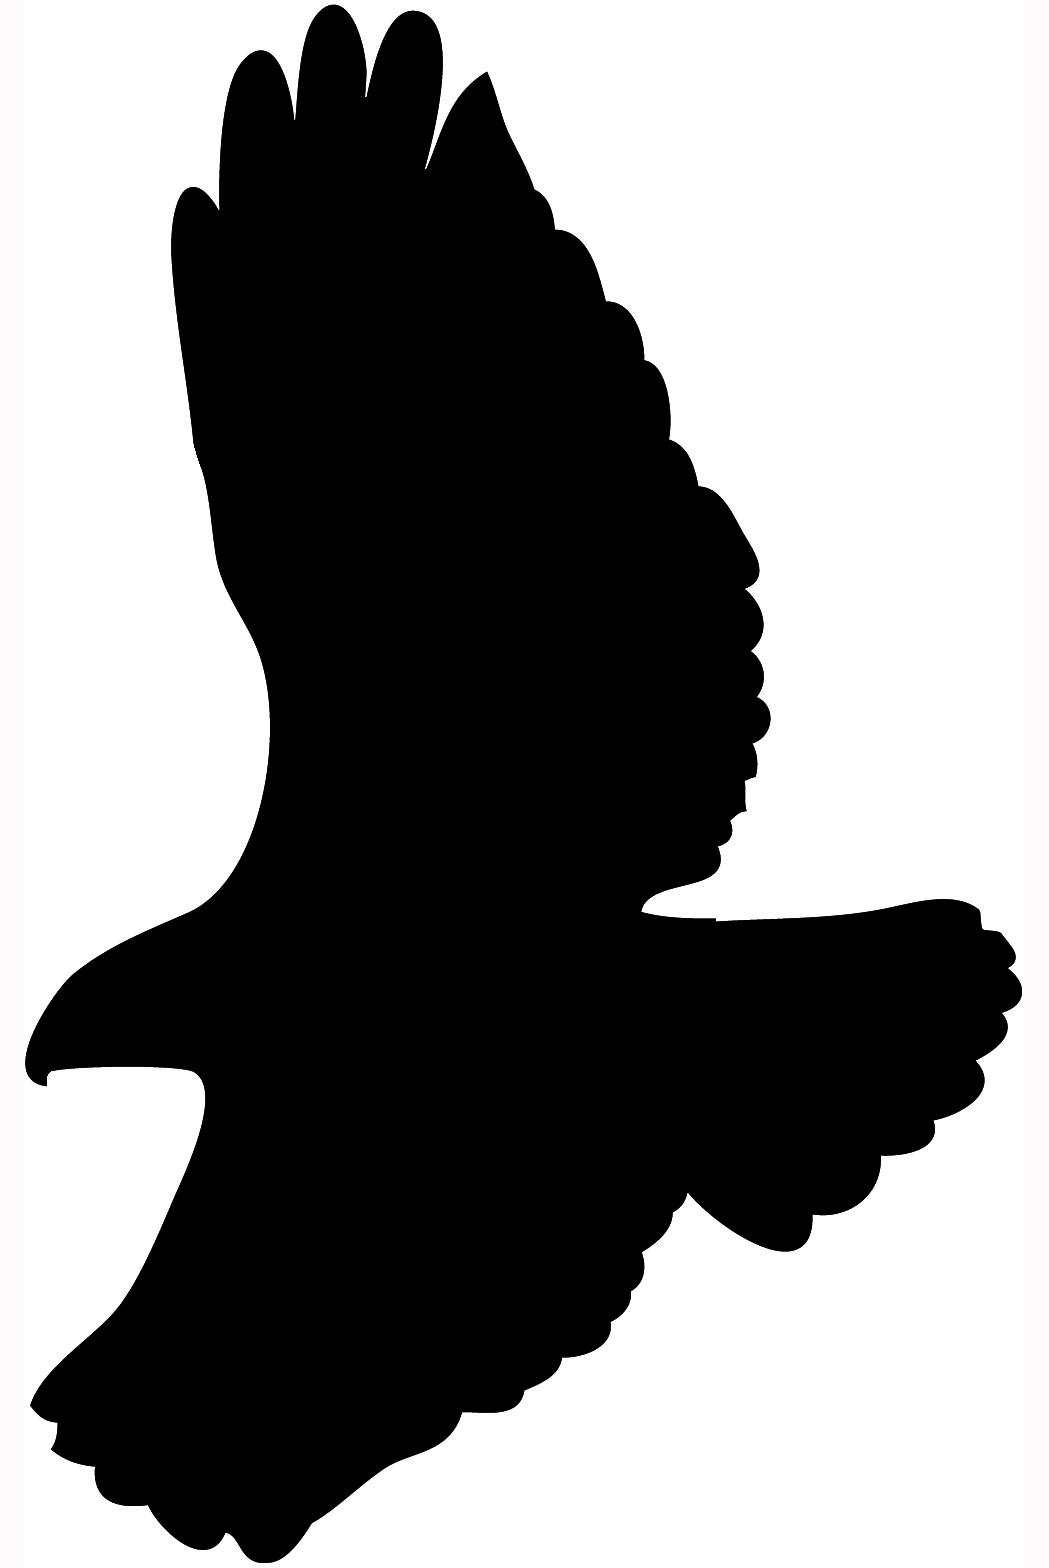 Black silhouette of hawk flying